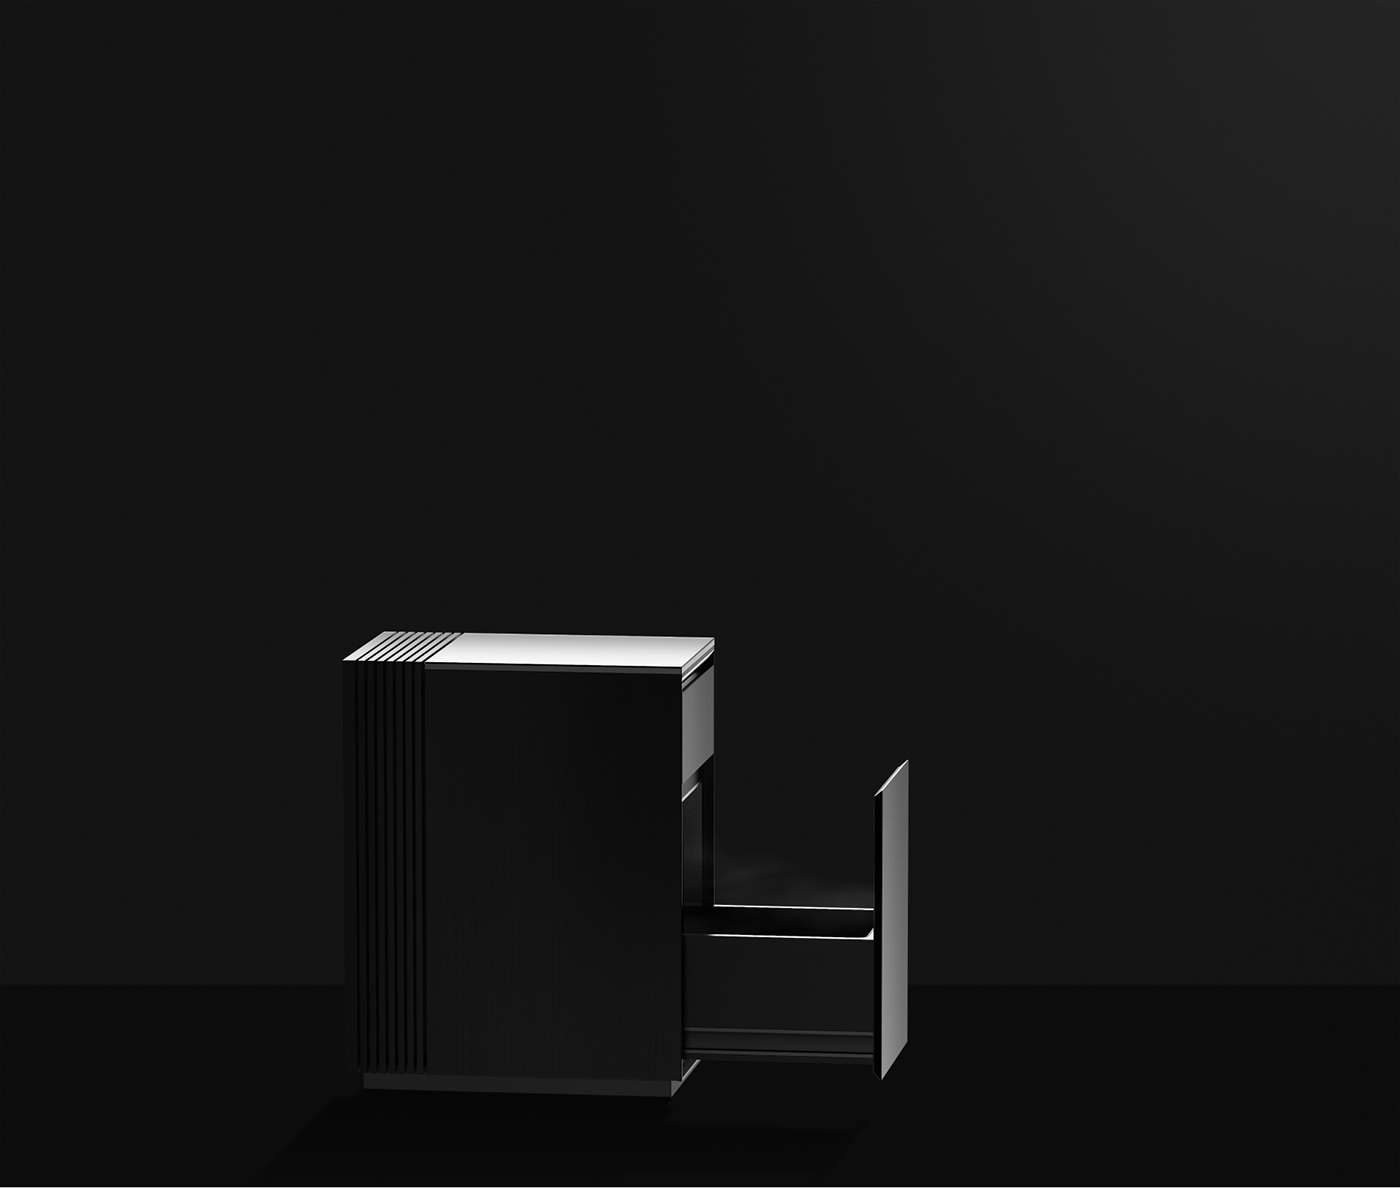 product product design  appliance appliance design refrigerator fridge furniture furniture design  drawer